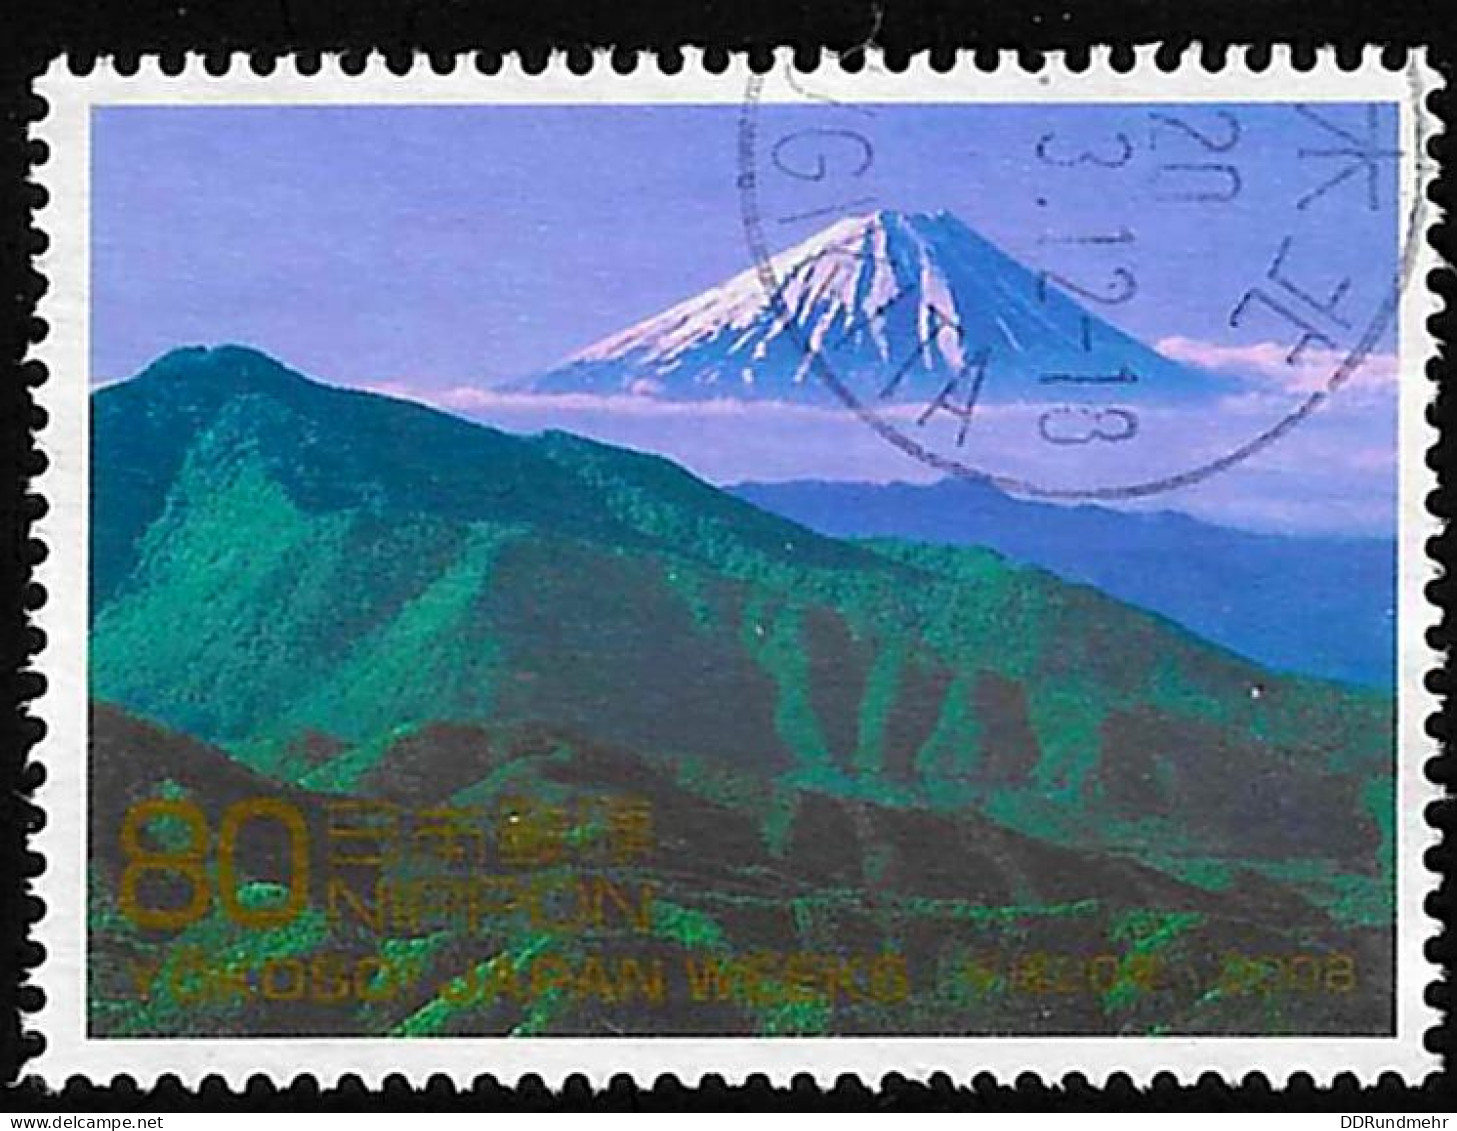 2008 Fuji   Michel JP 4447 Stamp Number JP 3014c Yvert Et Tellier JP 4274 Stanley Gibbons JP 3684 Used - Gebraucht